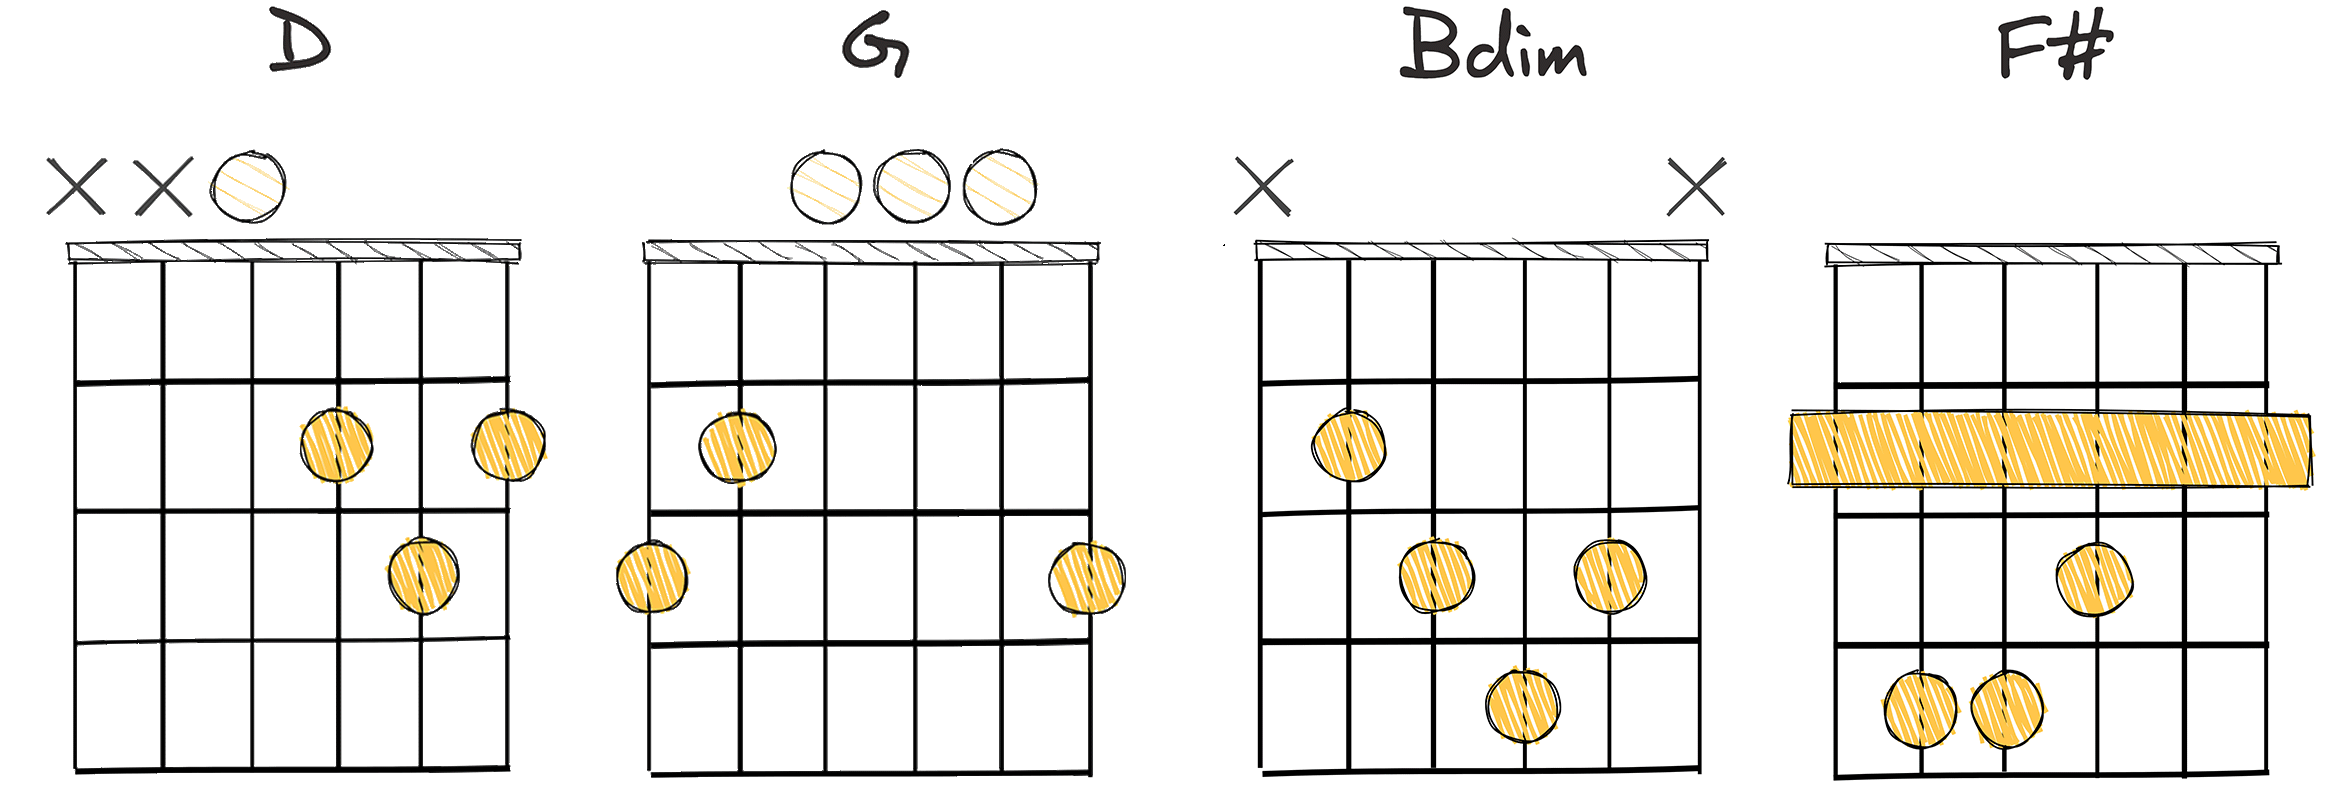 I-IV-vii°-III (1-4-7-3) chords diagram